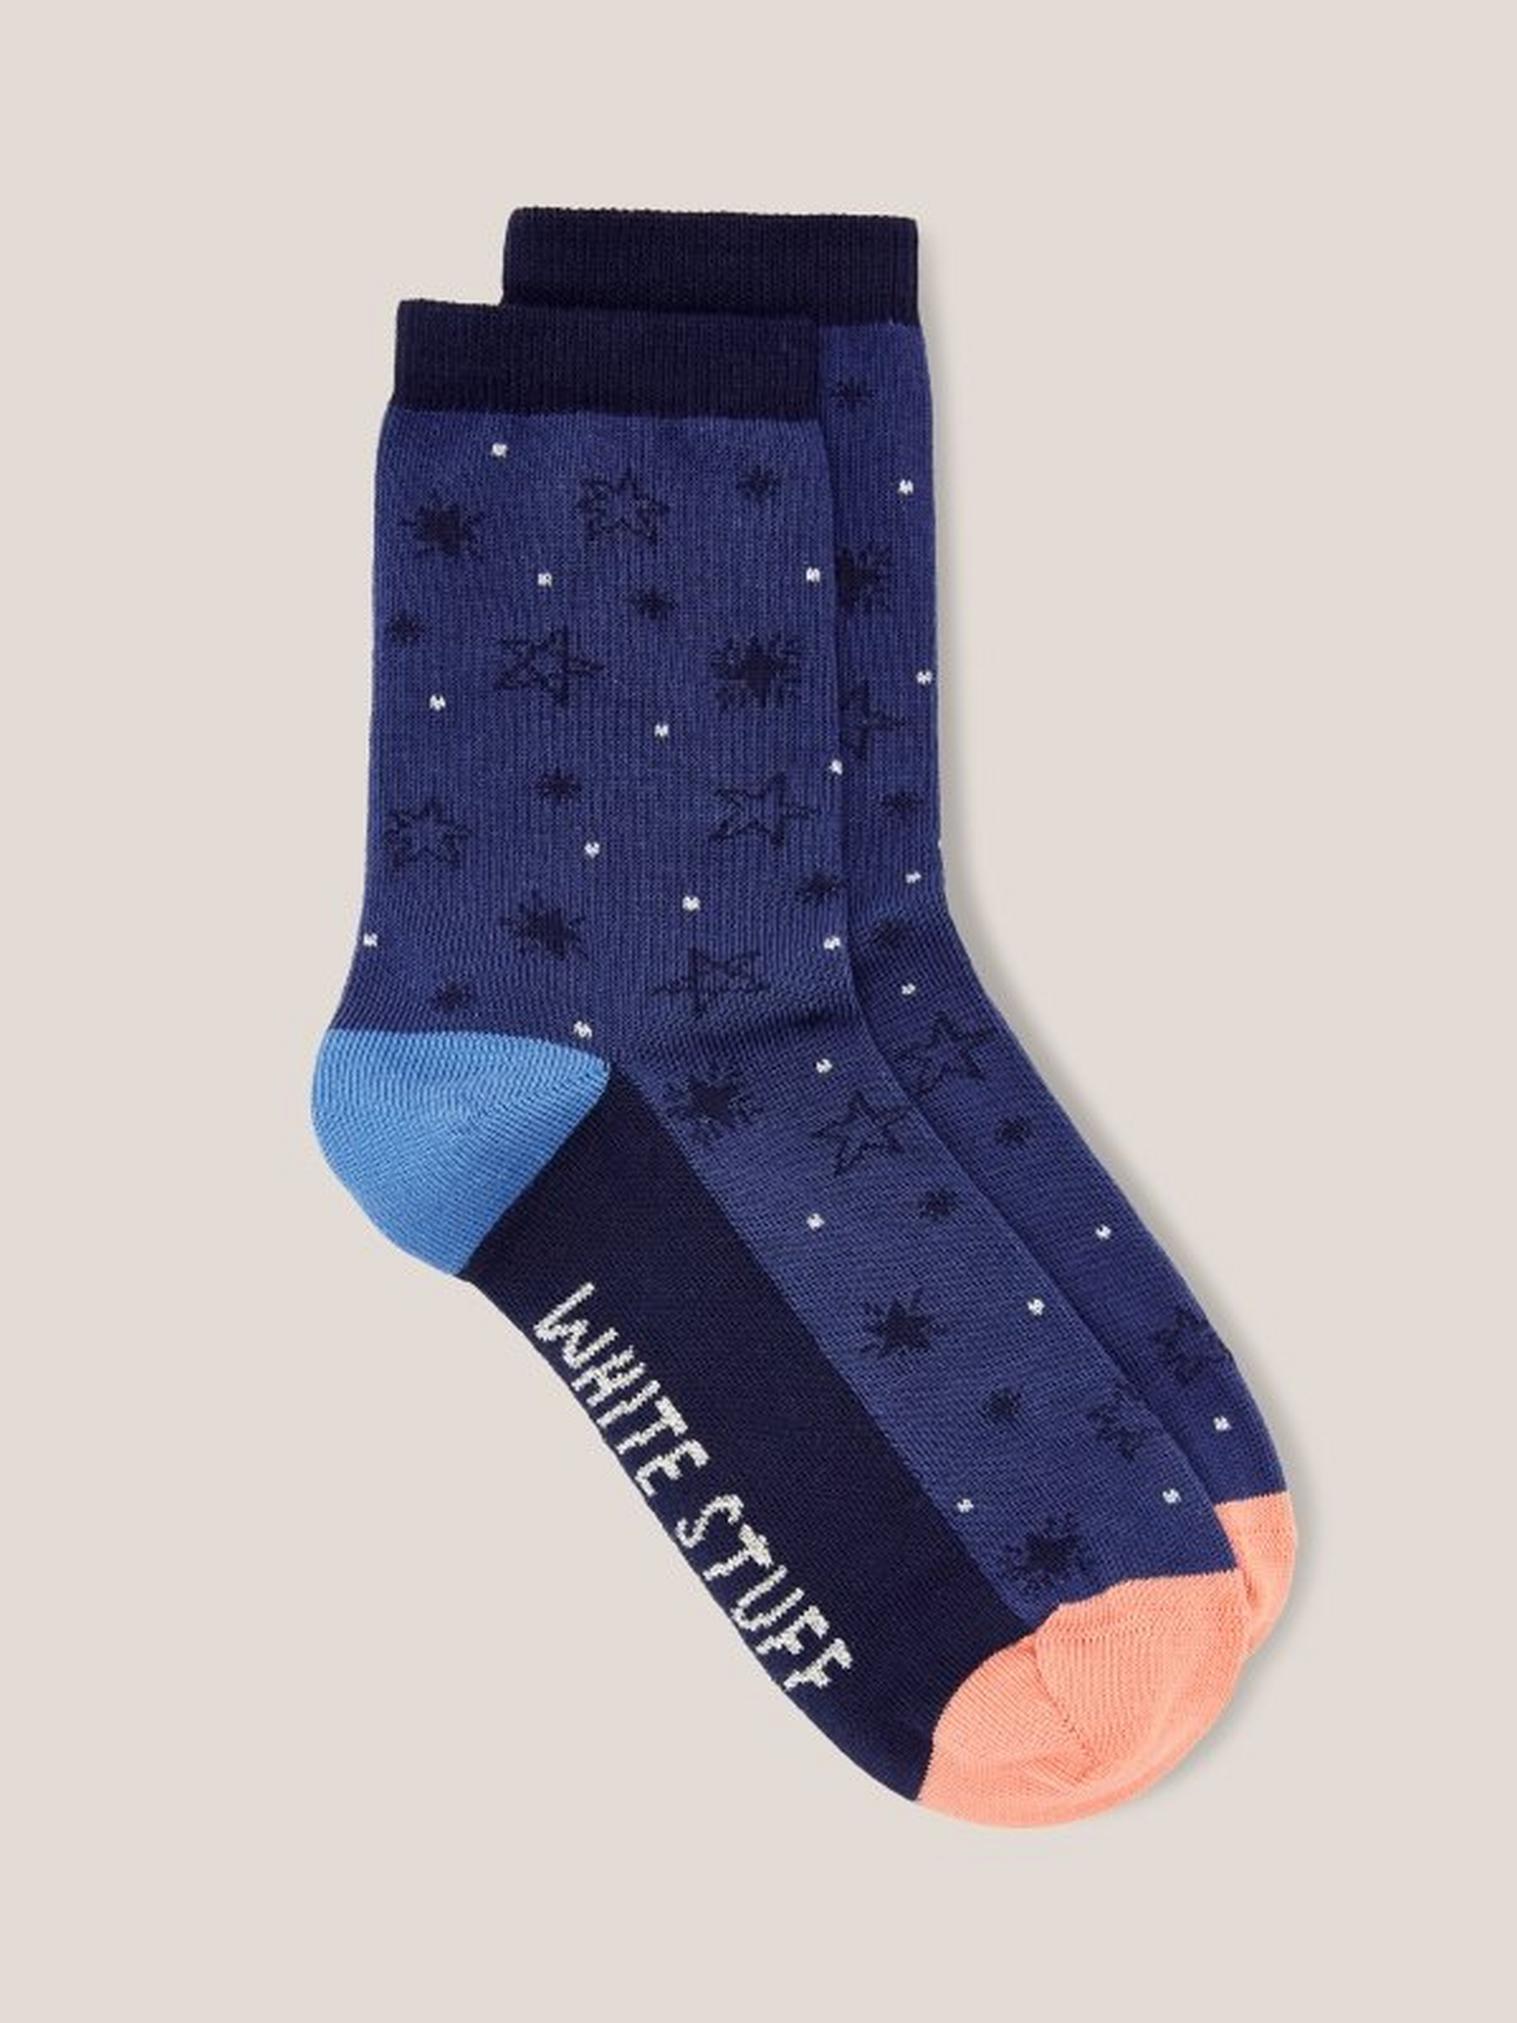 Sparkle Star Ankle Socks in NAVY MULTI - FLAT FRONT